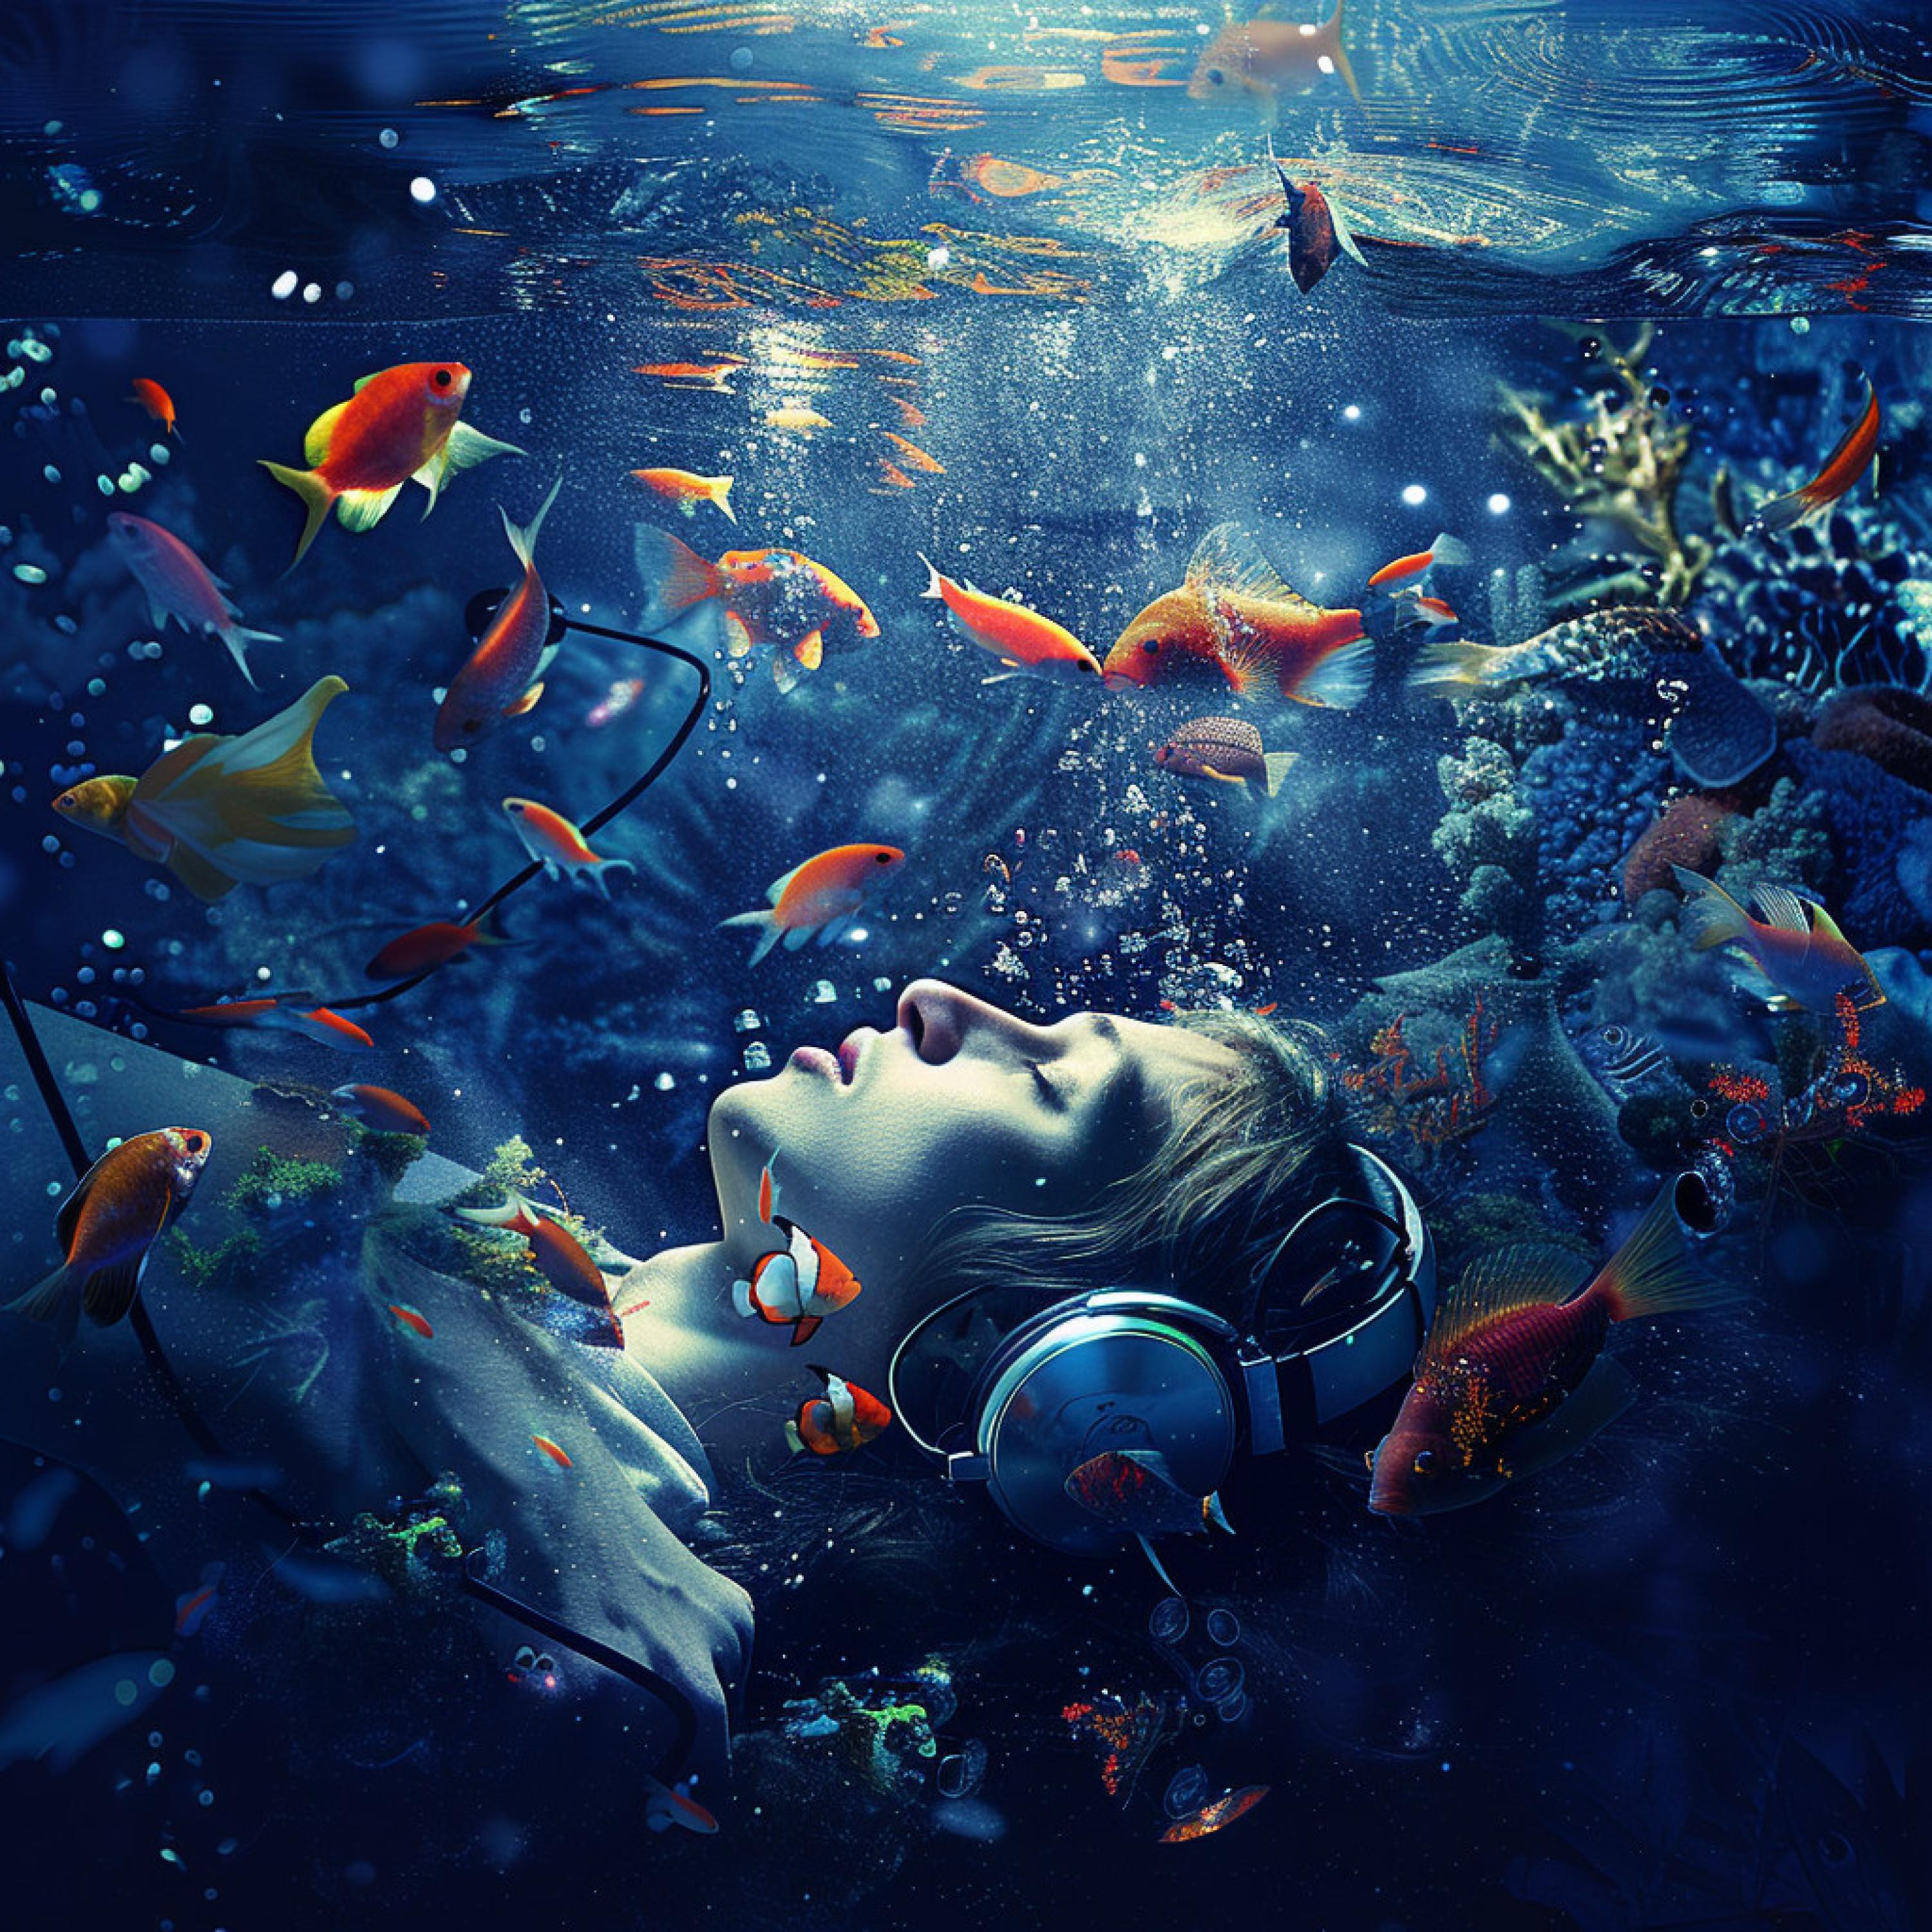 Dreamcation - Sleep in Ocean's Arms